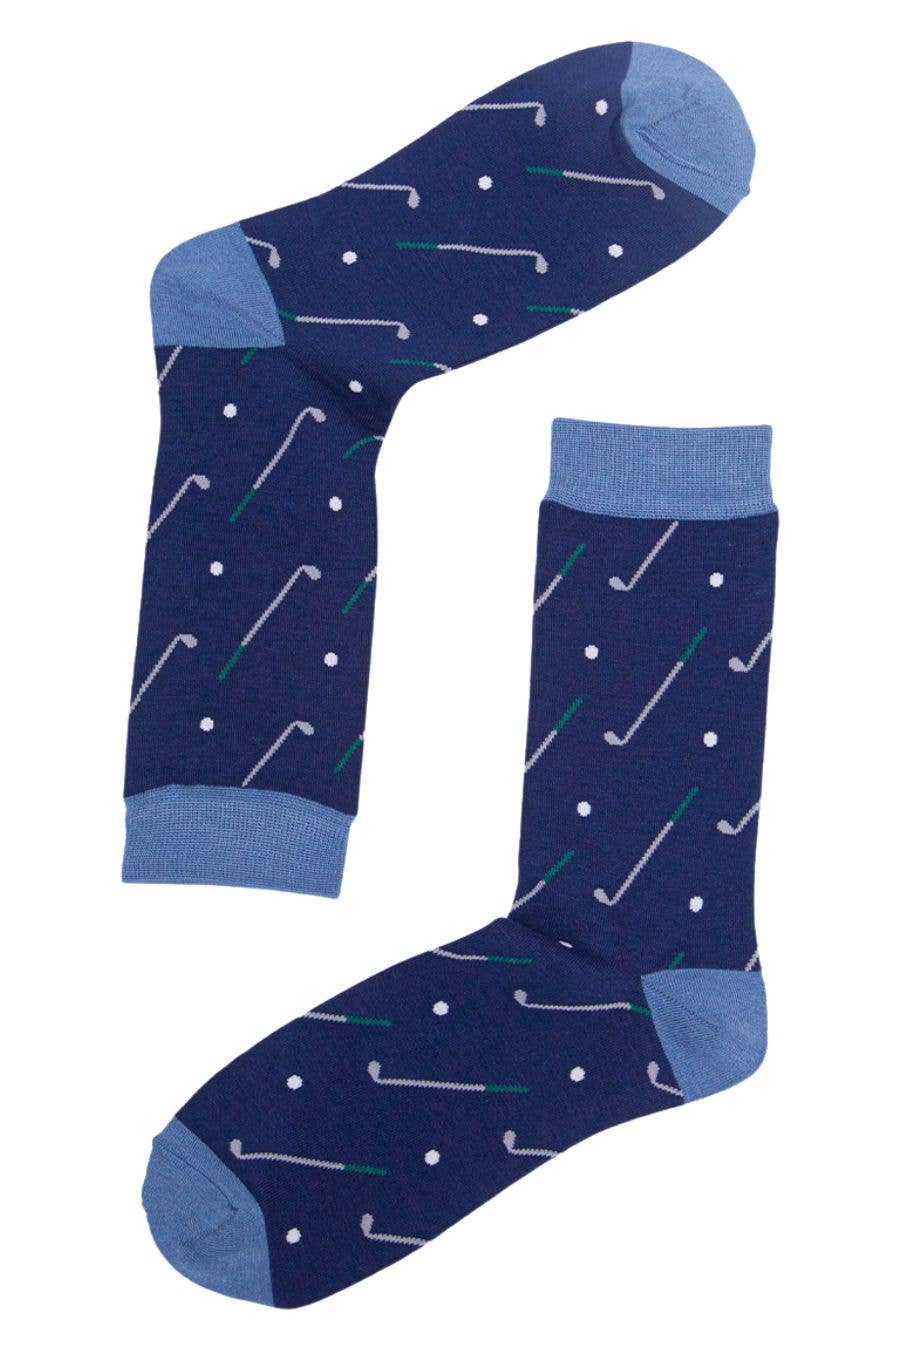 Sock Talk - Mens Bamboo Golf Socks Novelty Dress Socks Navy Blue